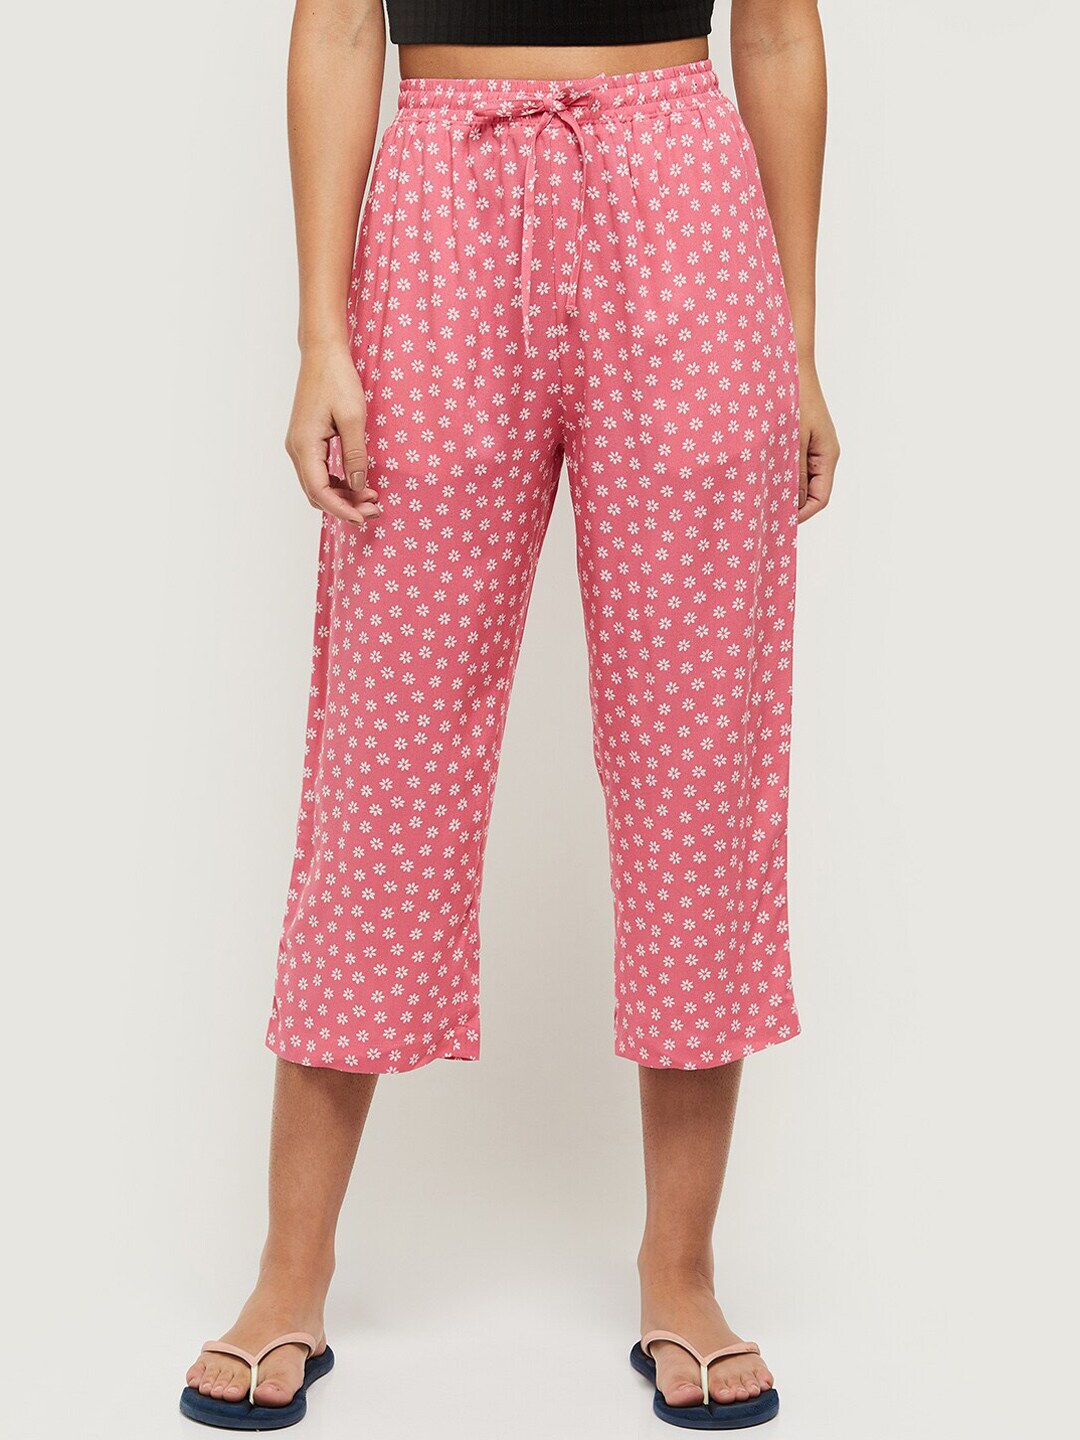 max Women Pink Printed Pyjamas Price in India